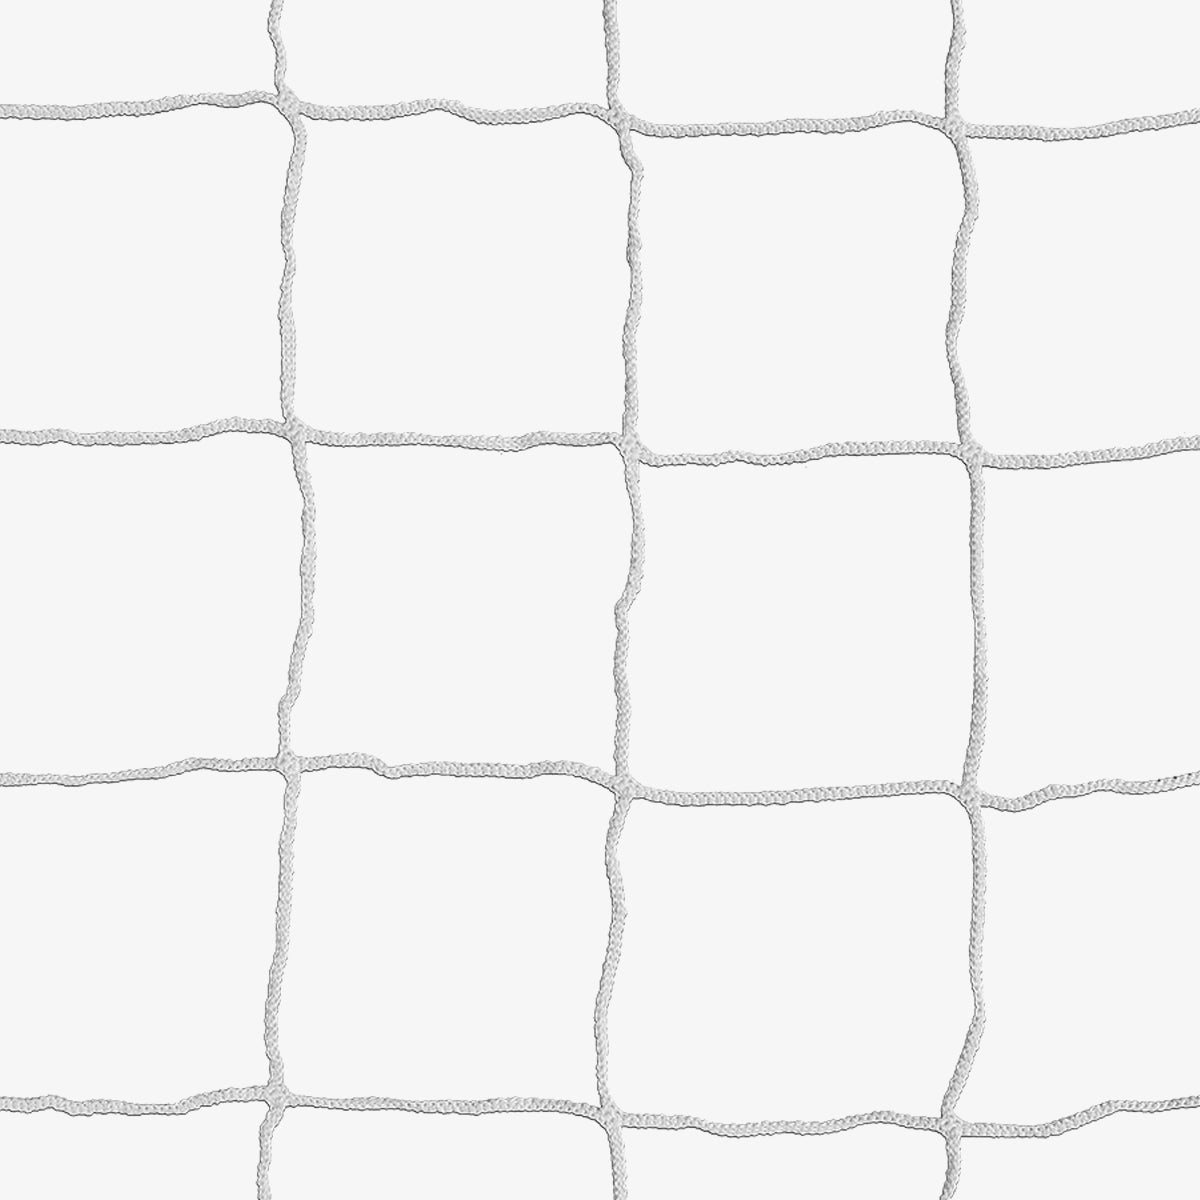 Fusion 120 Soccer Goal Net, 8H x 24W x 3D x 4 1/2B, 120mm mesh, Solid Braid Knotless